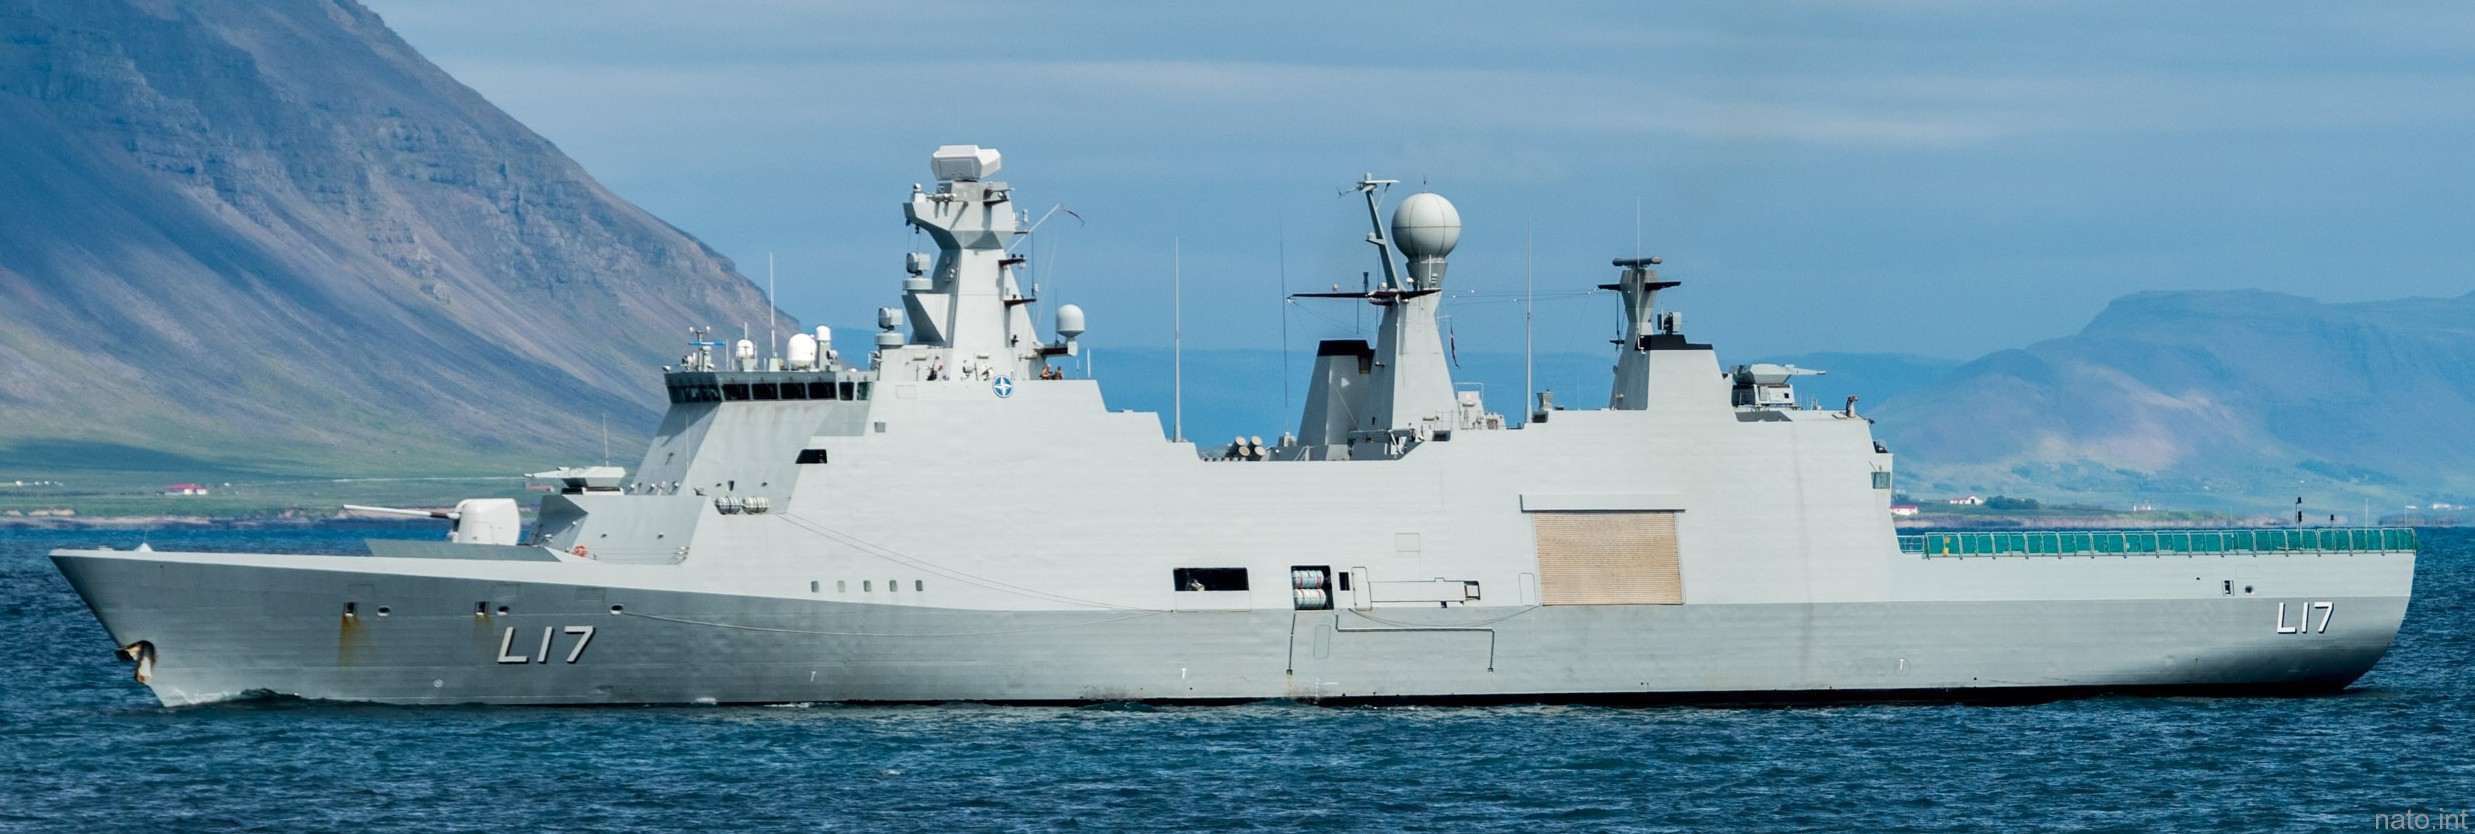 f-342 hdms esbern snare l-17 frigate command support ship royal danish navy 92